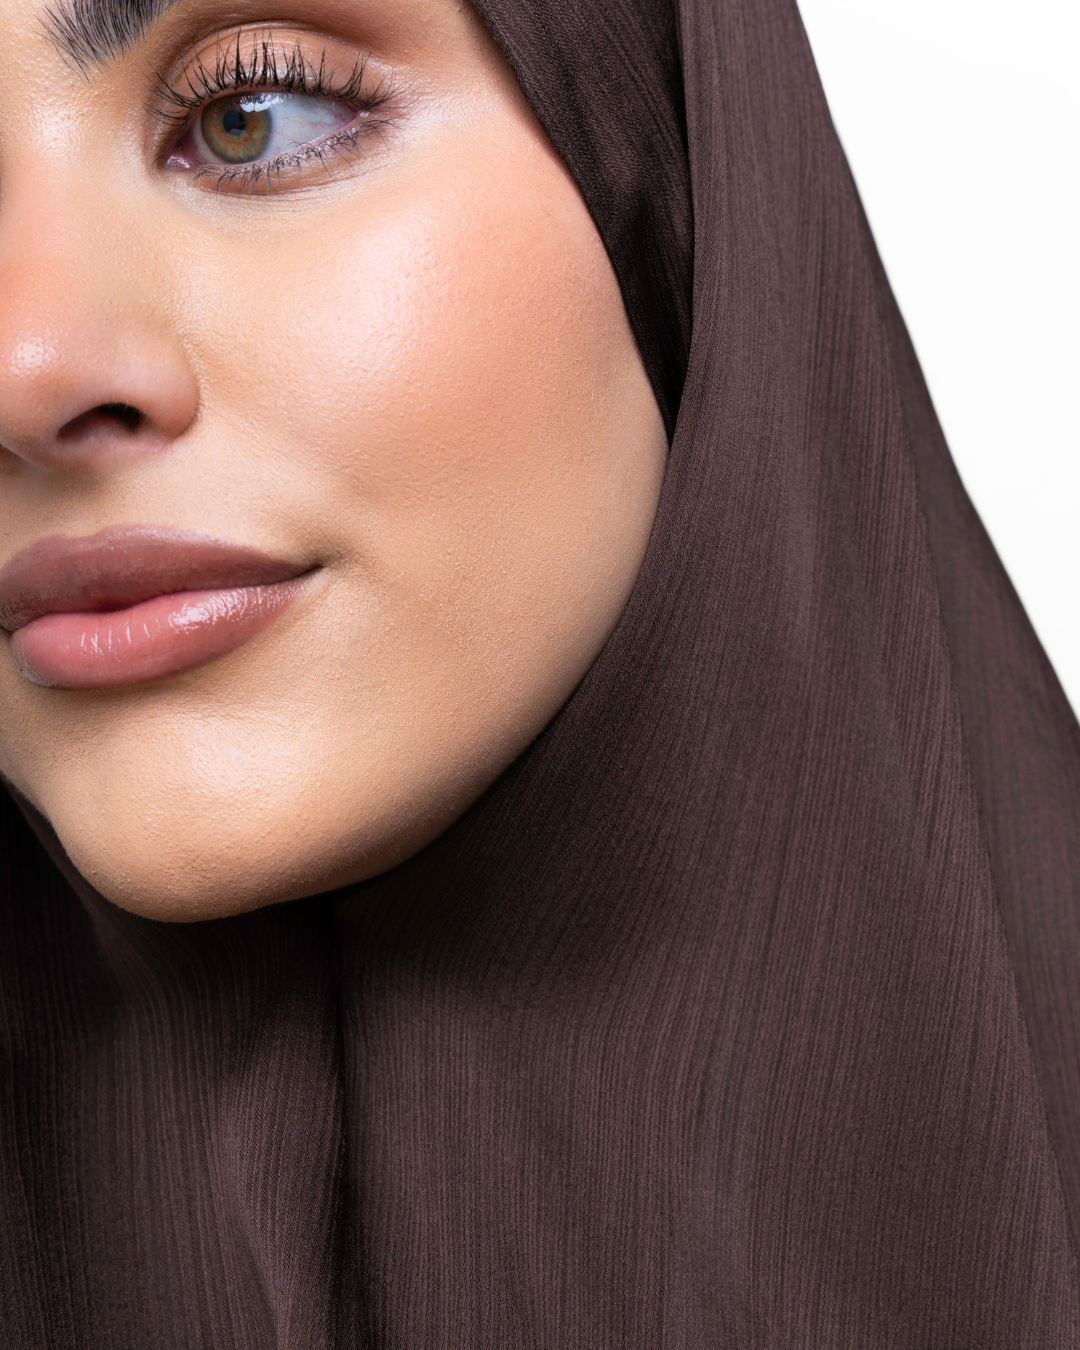 Textured Satin Hijab - Dark Chocolate